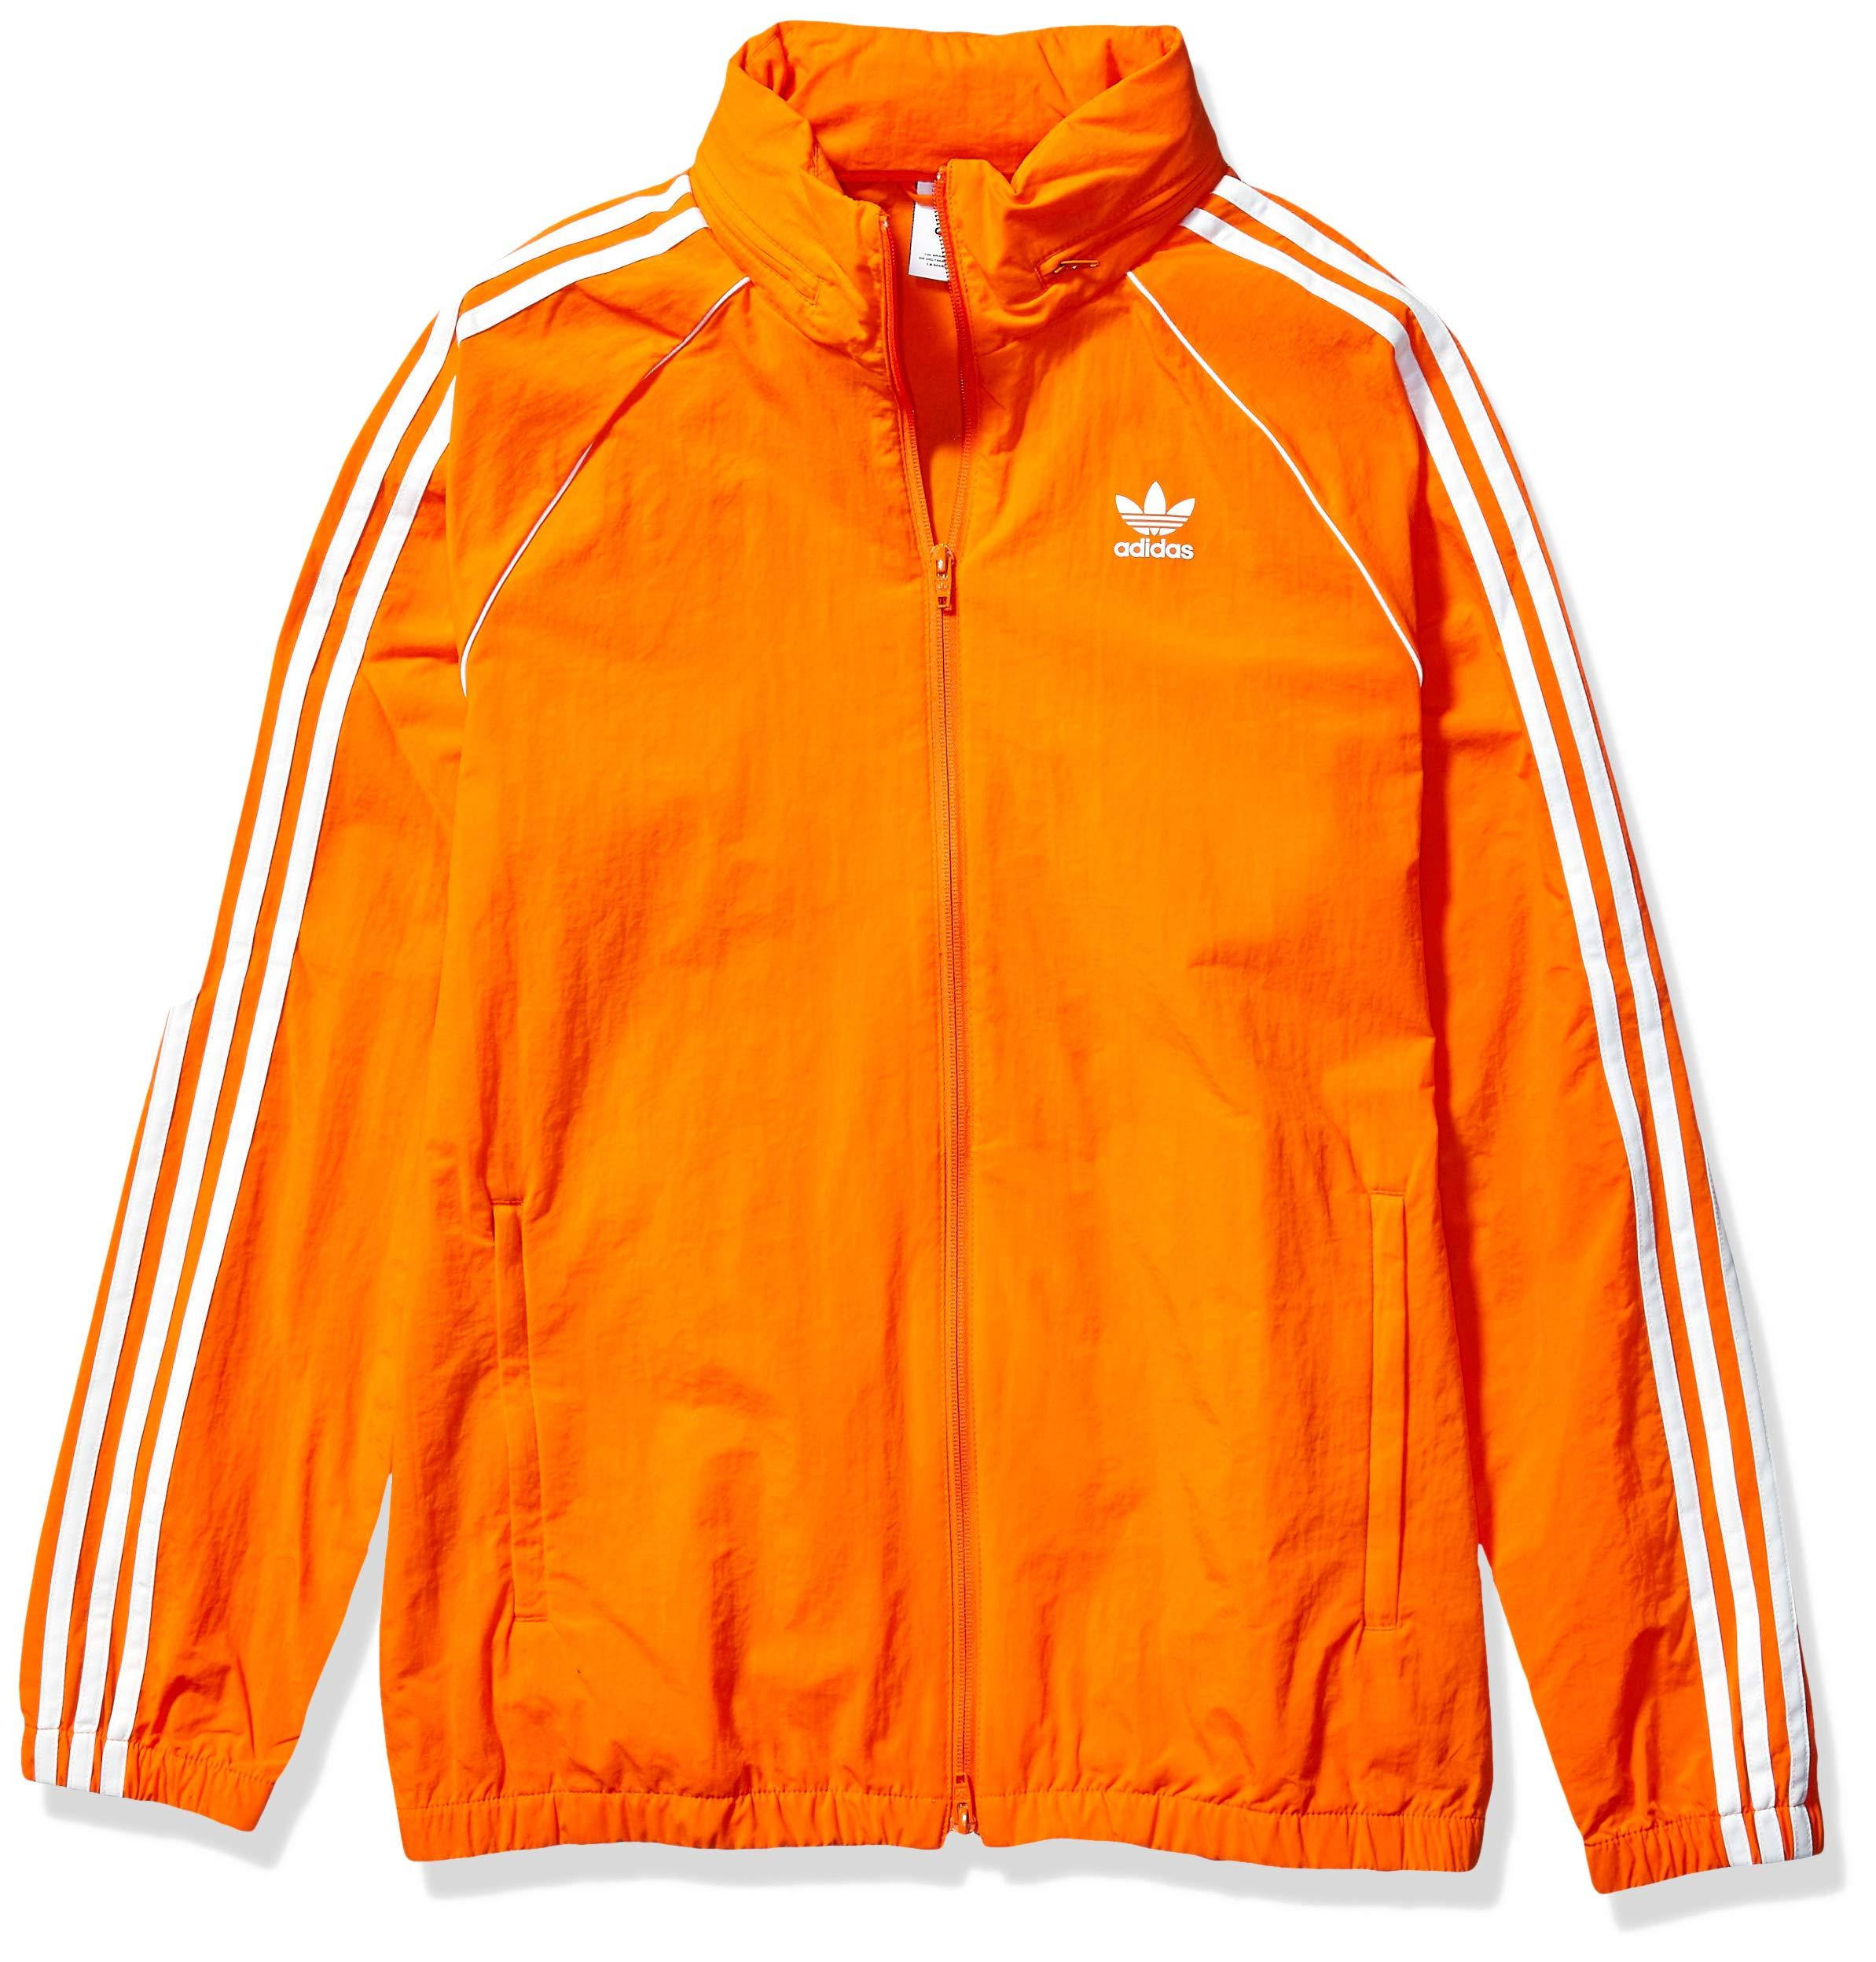 Buy > adidas originals orange jacket > in stock